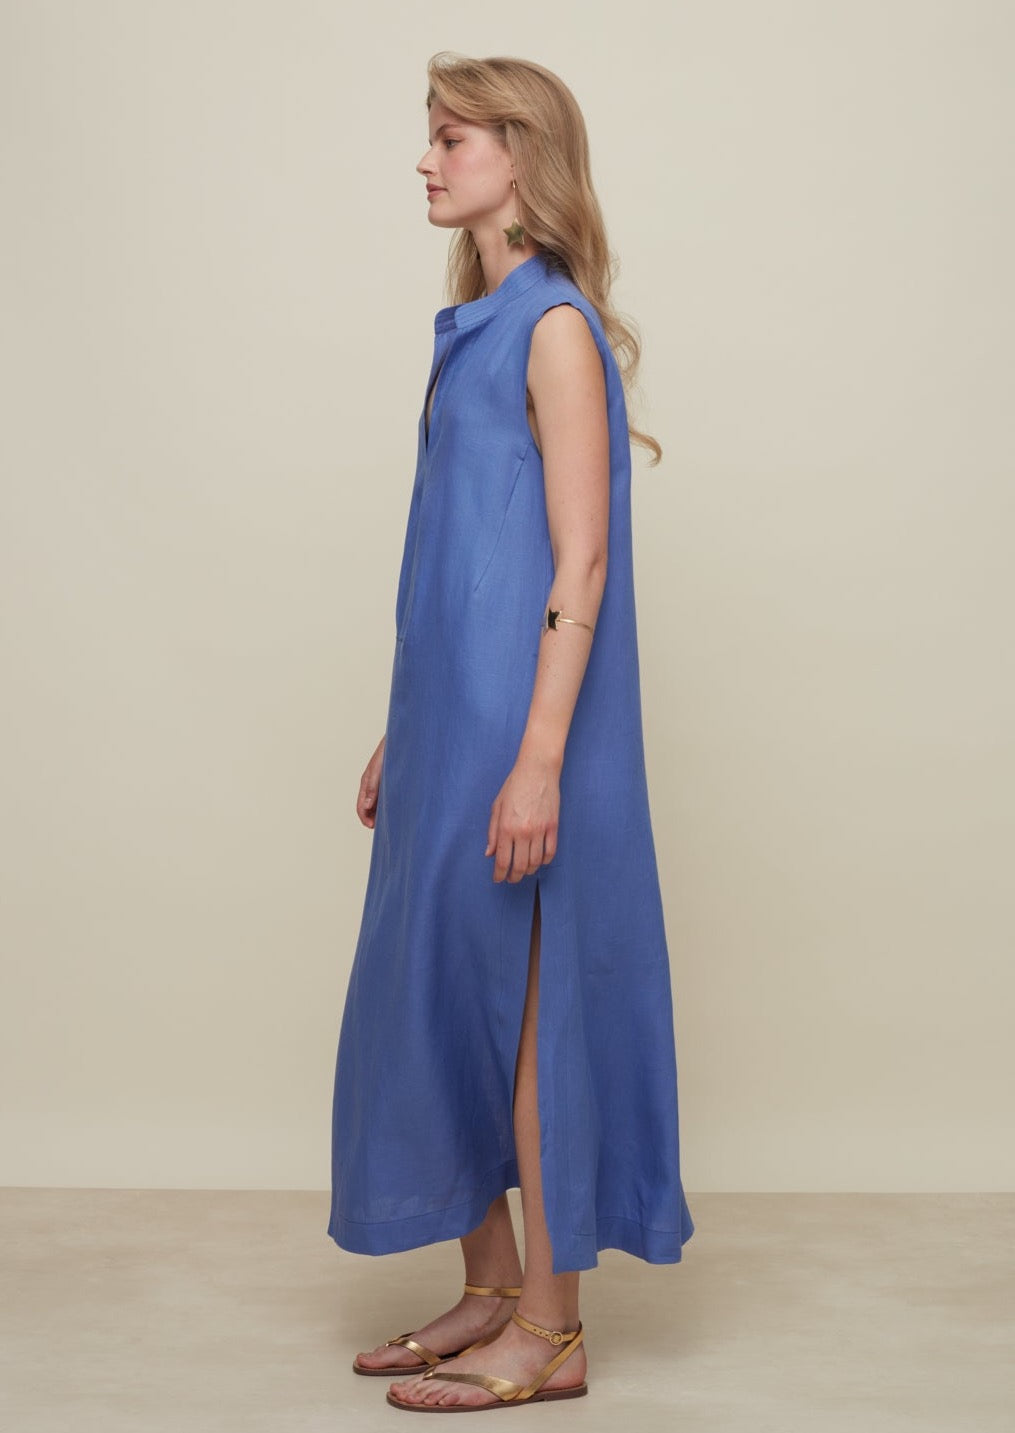 Galeria-Frade Blue Mauve Dress-Justbrazil